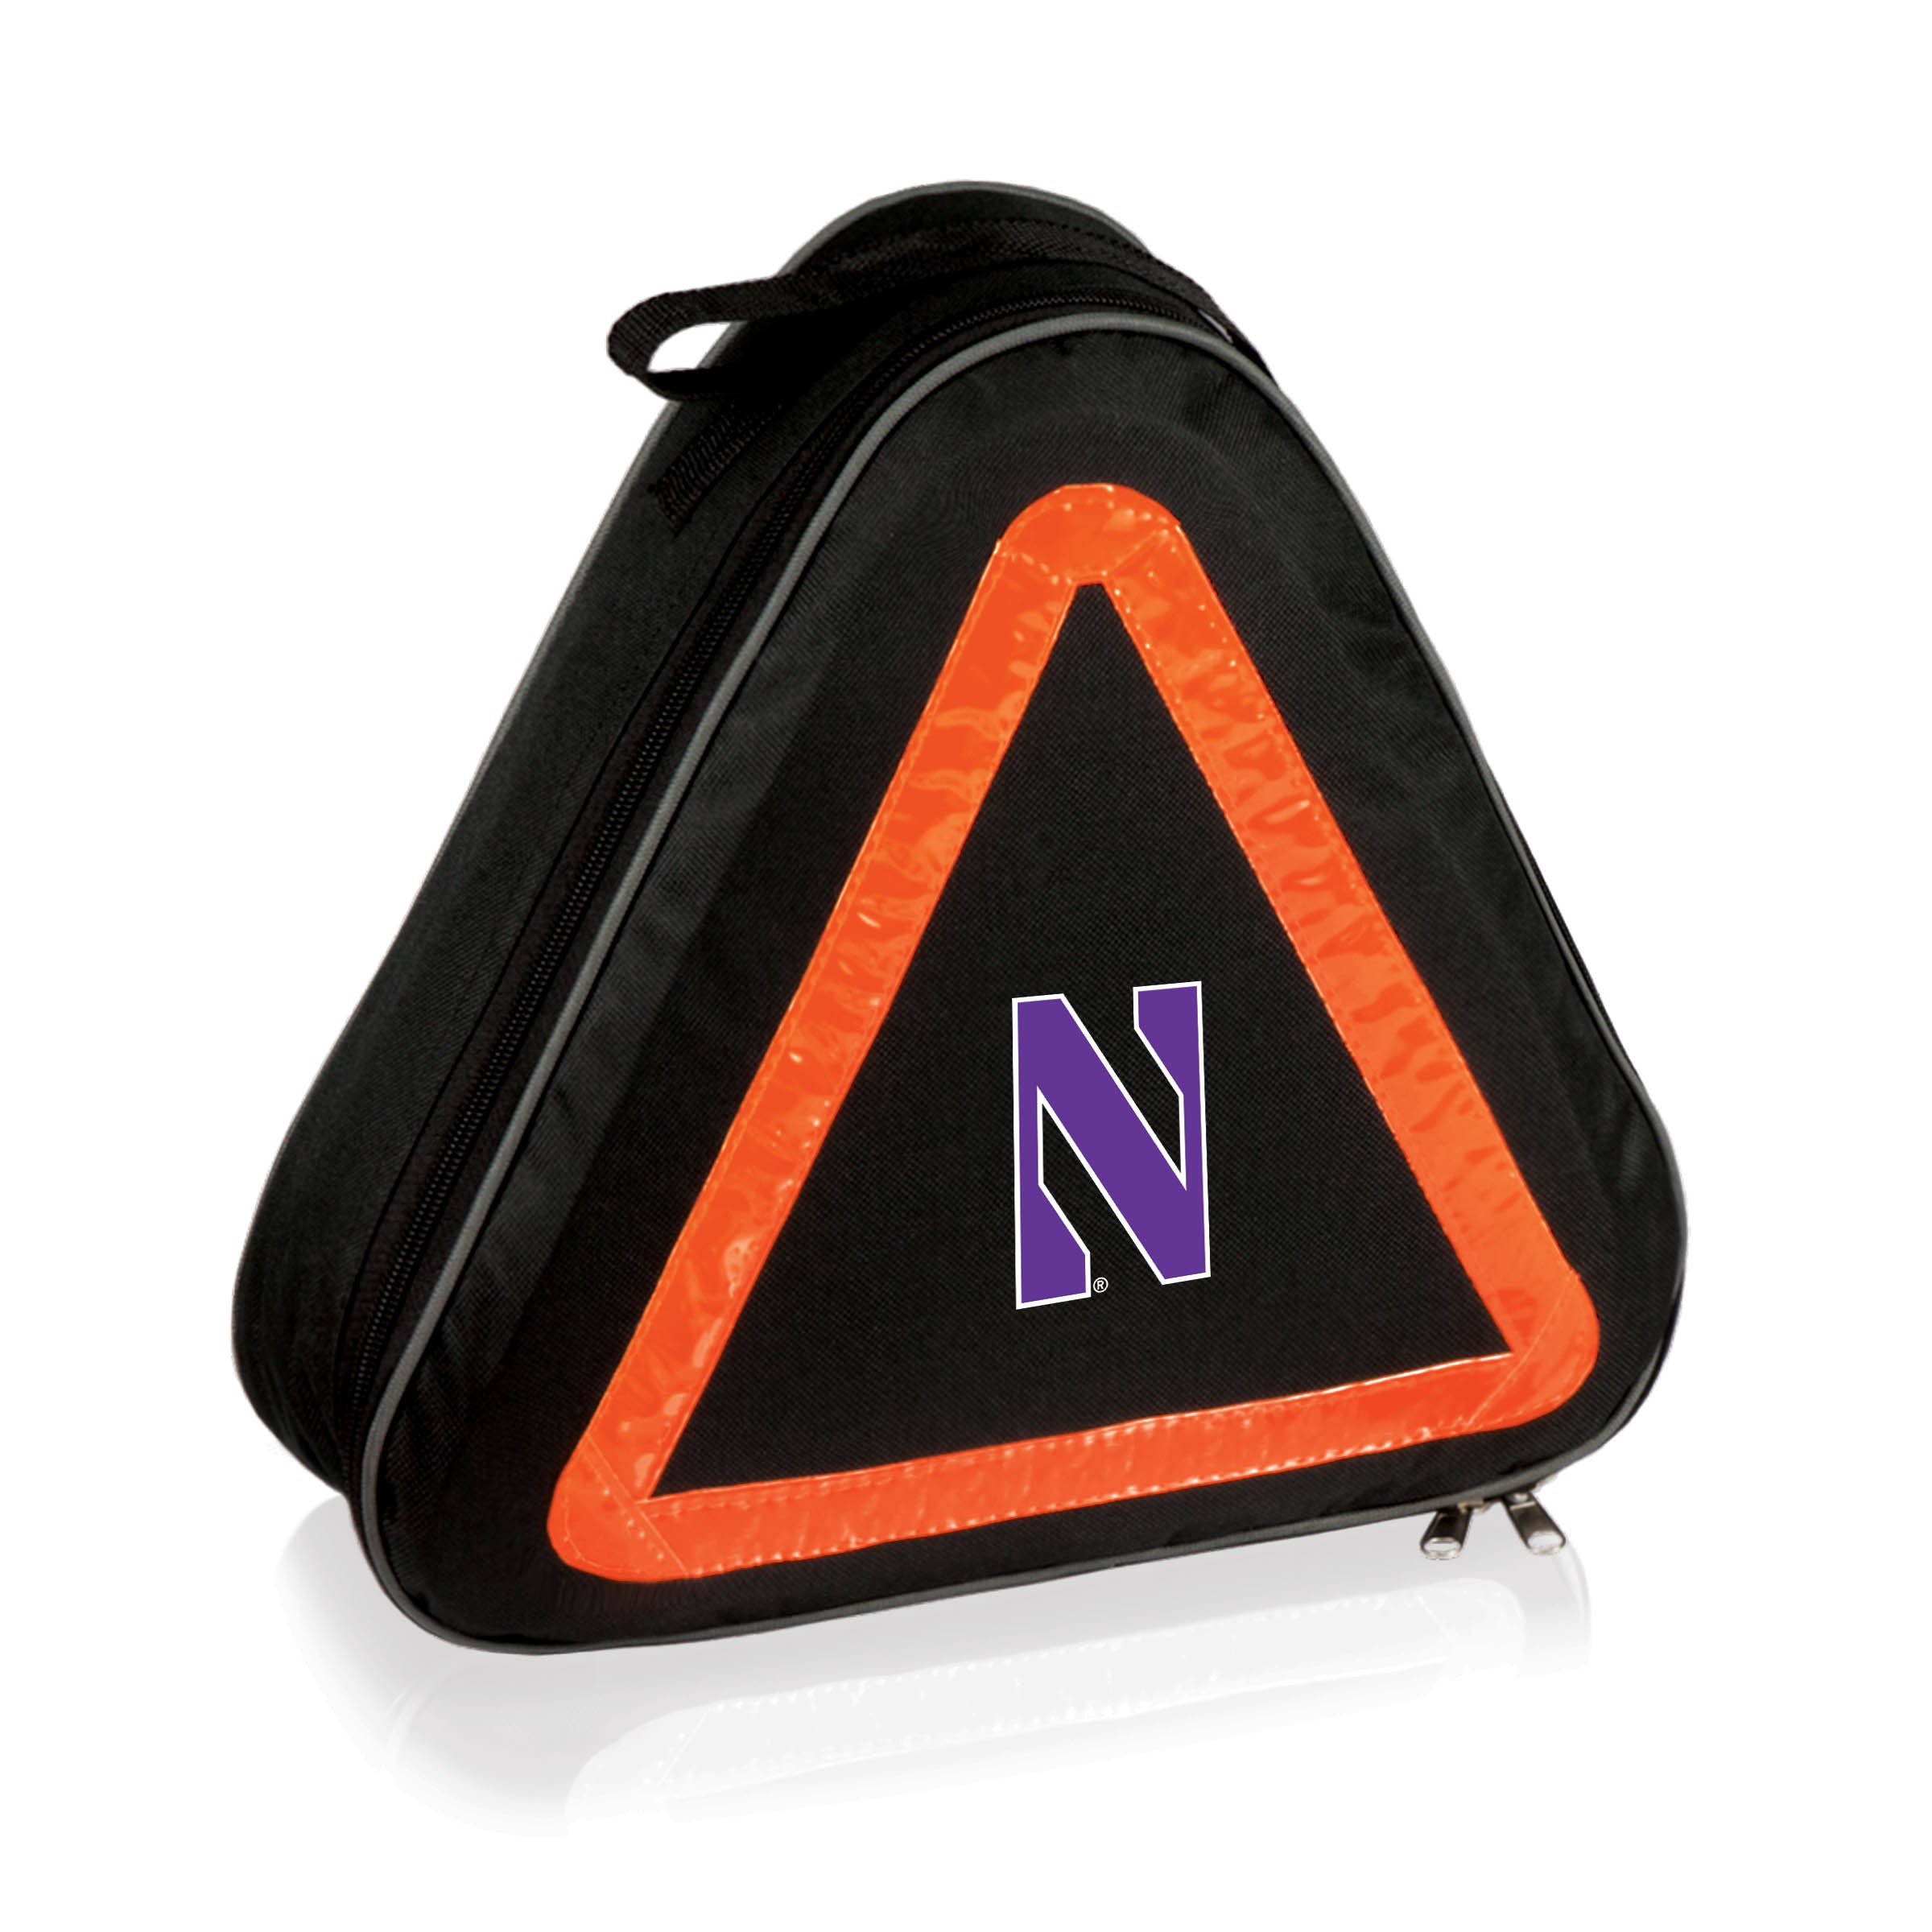 Northwestern Wildcats - Roadside Emergency Car Kit